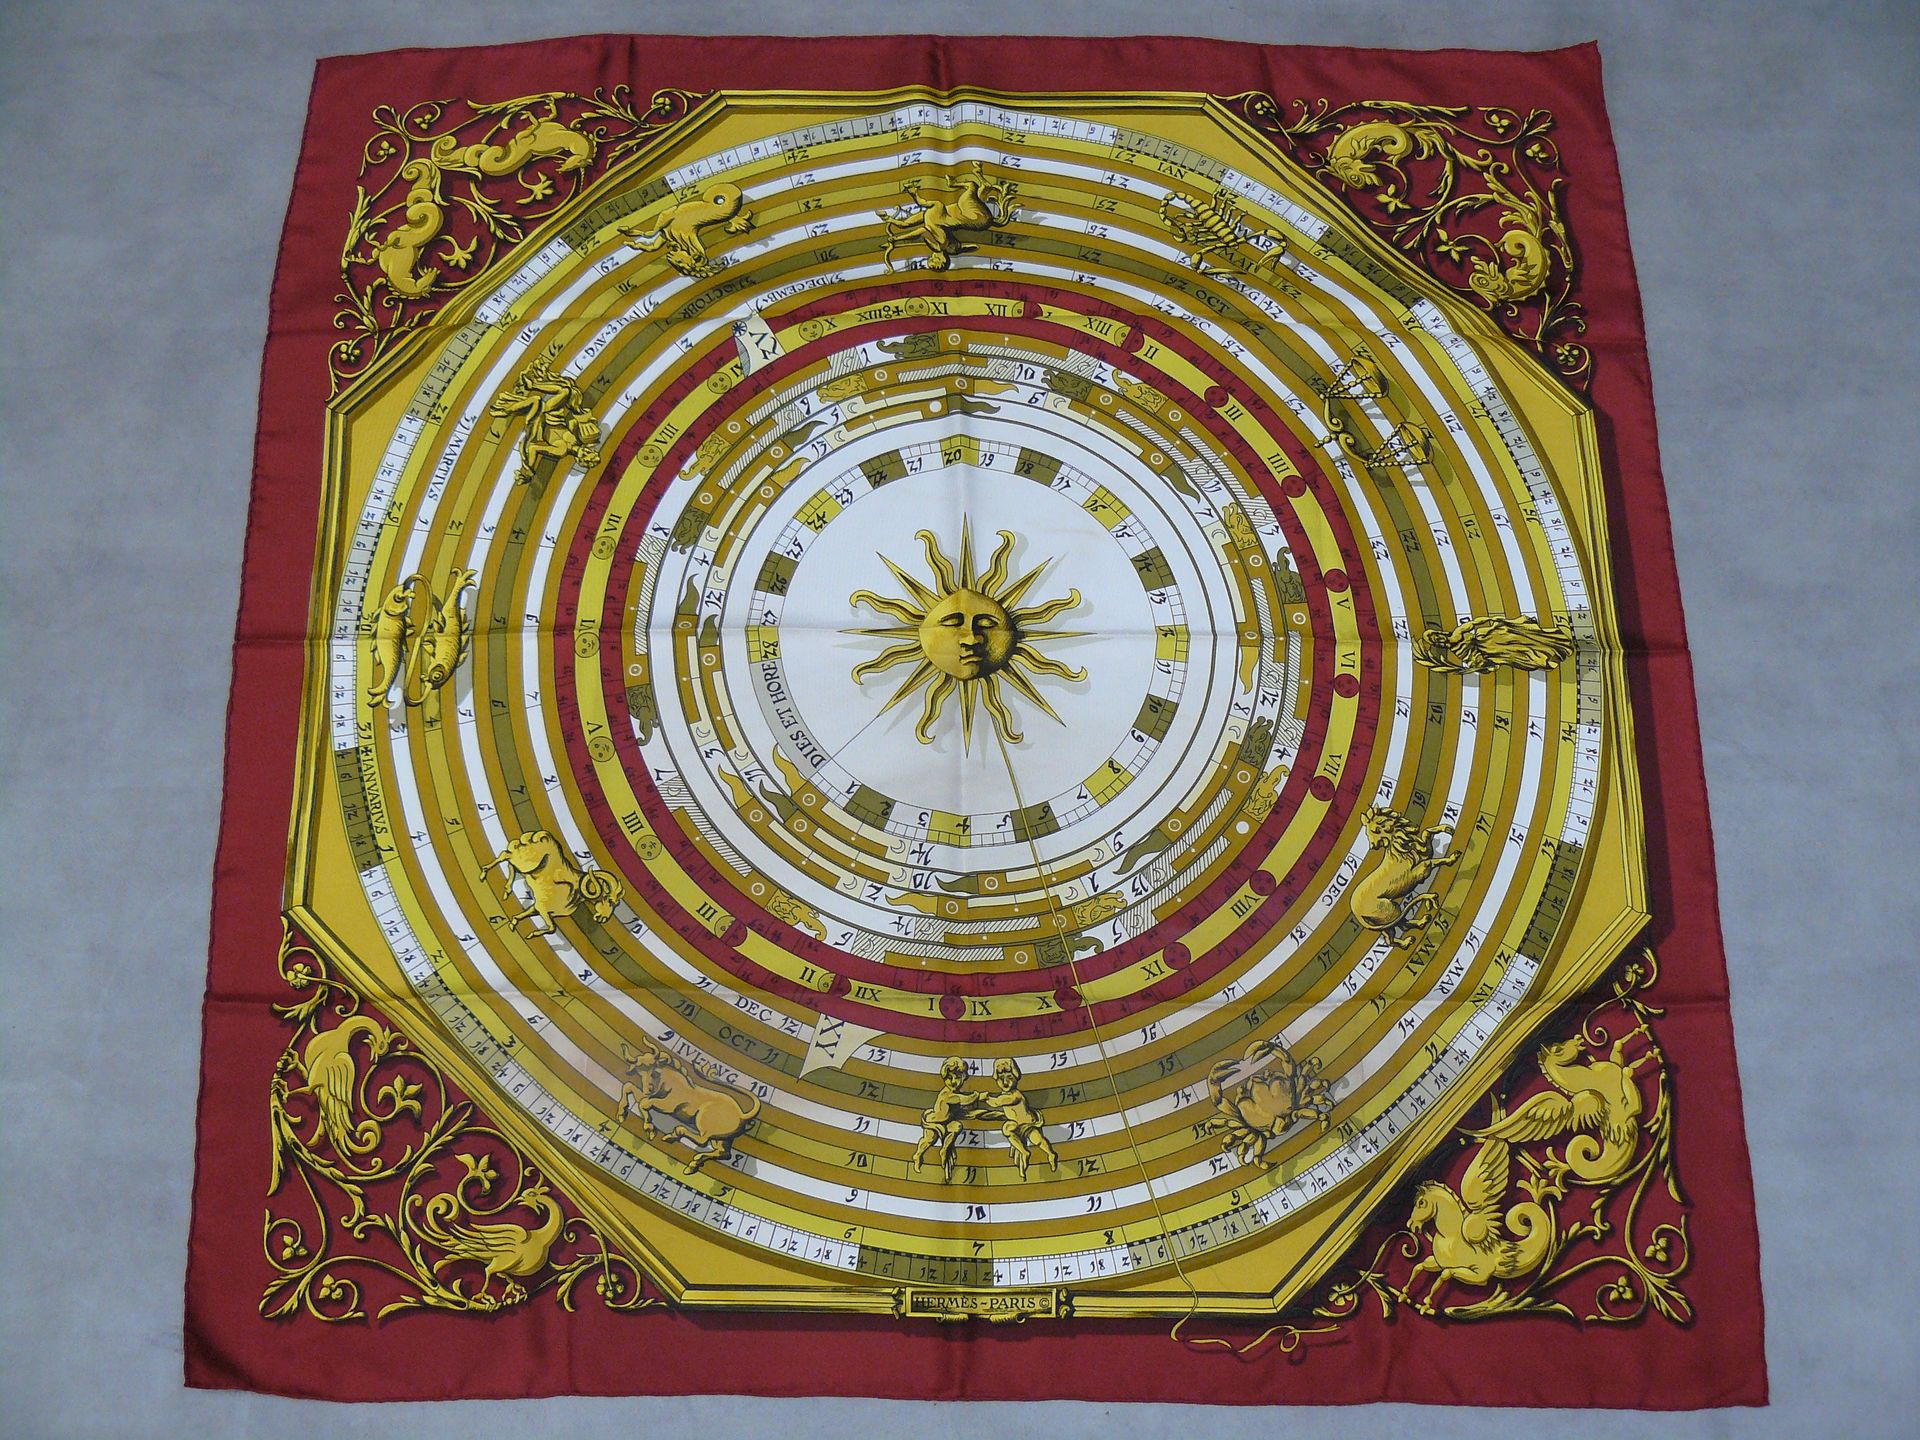 HERMES 巴黎爱马仕，一条装饰有日晷和十二星座的Dies et Hore丝巾 - 90 x 90厘米。加入了一个爱马仕的盒子